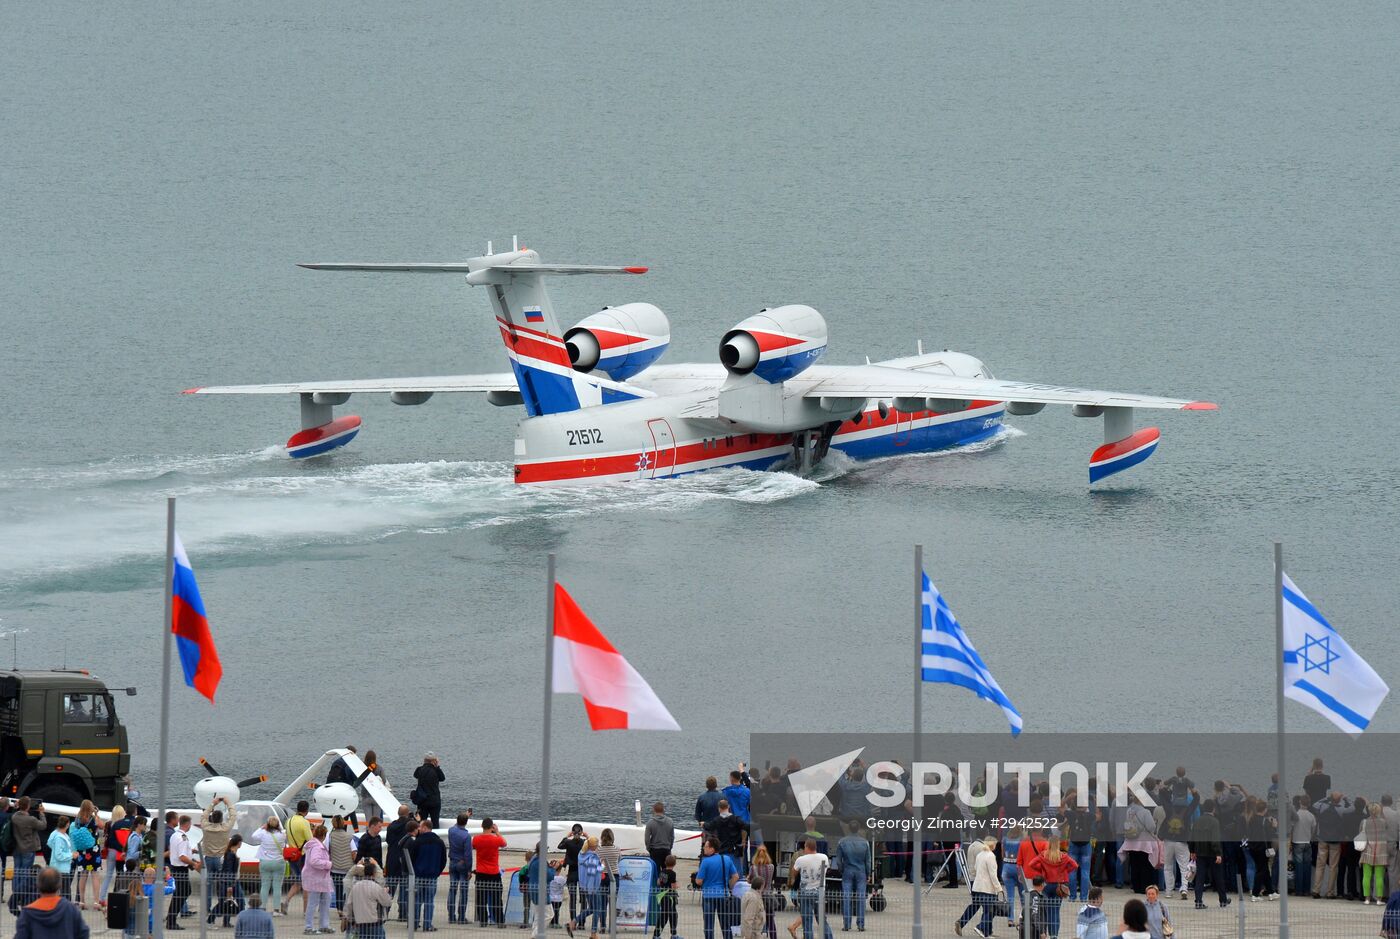 Gidroaviasalon 2016 international expo of hydro aviation in Gelendzhik